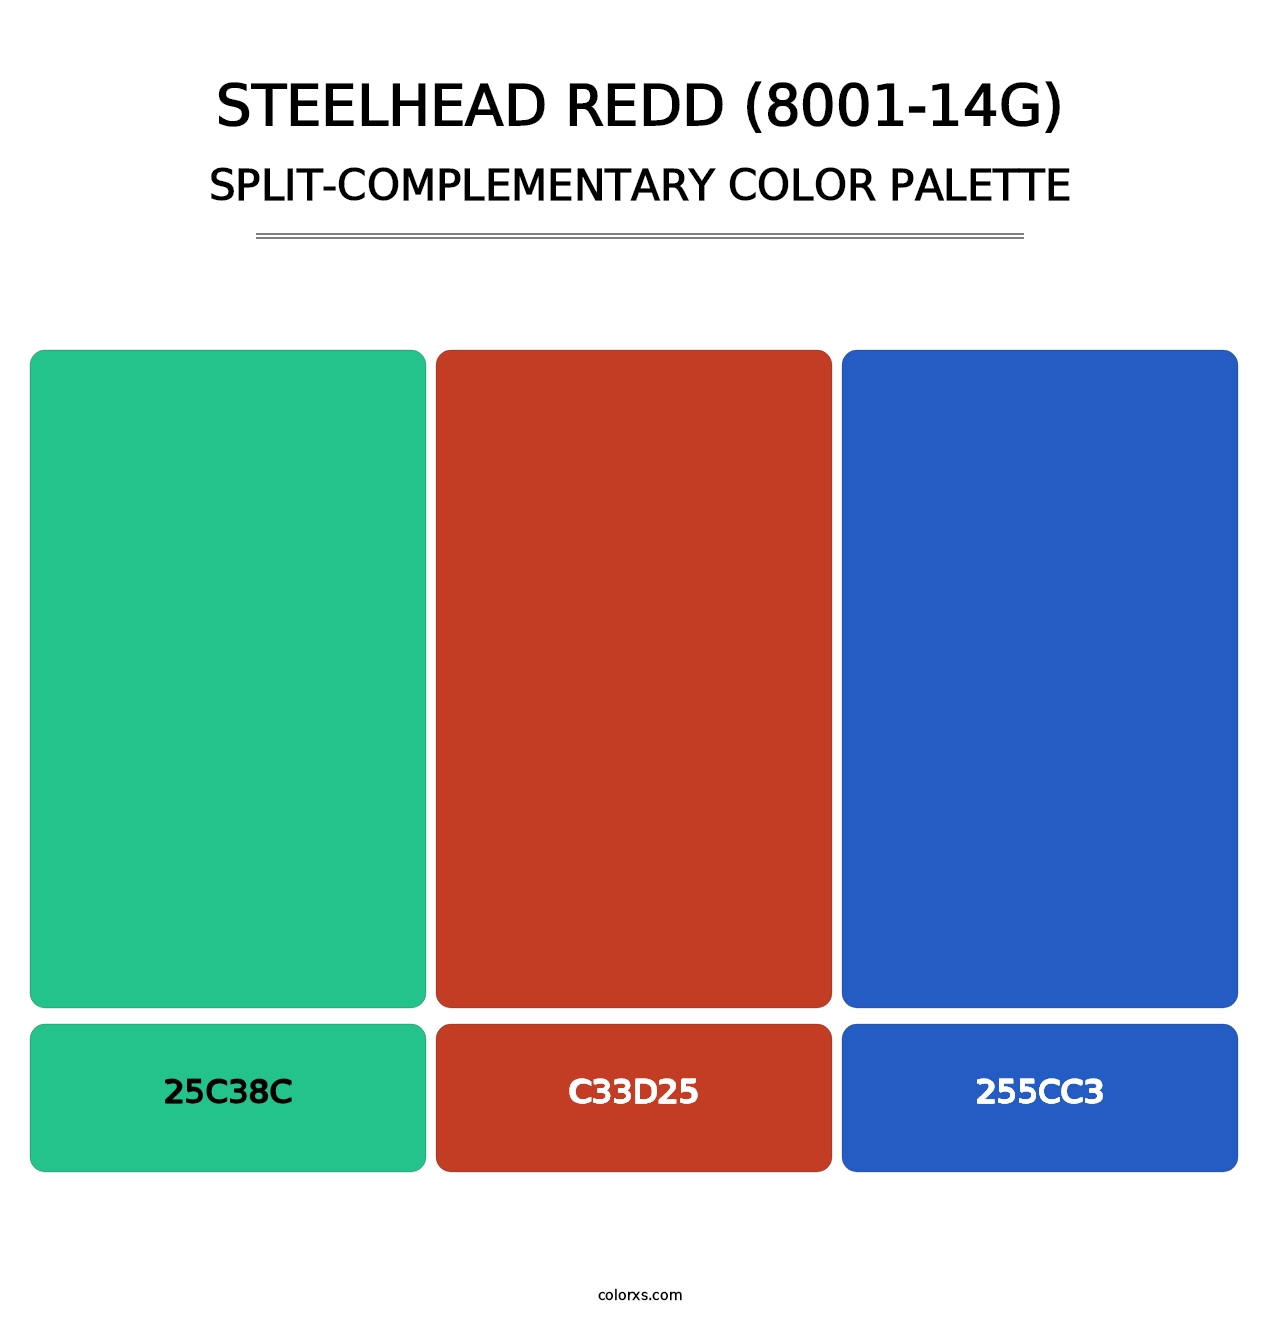 Steelhead Redd (8001-14G) - Split-Complementary Color Palette